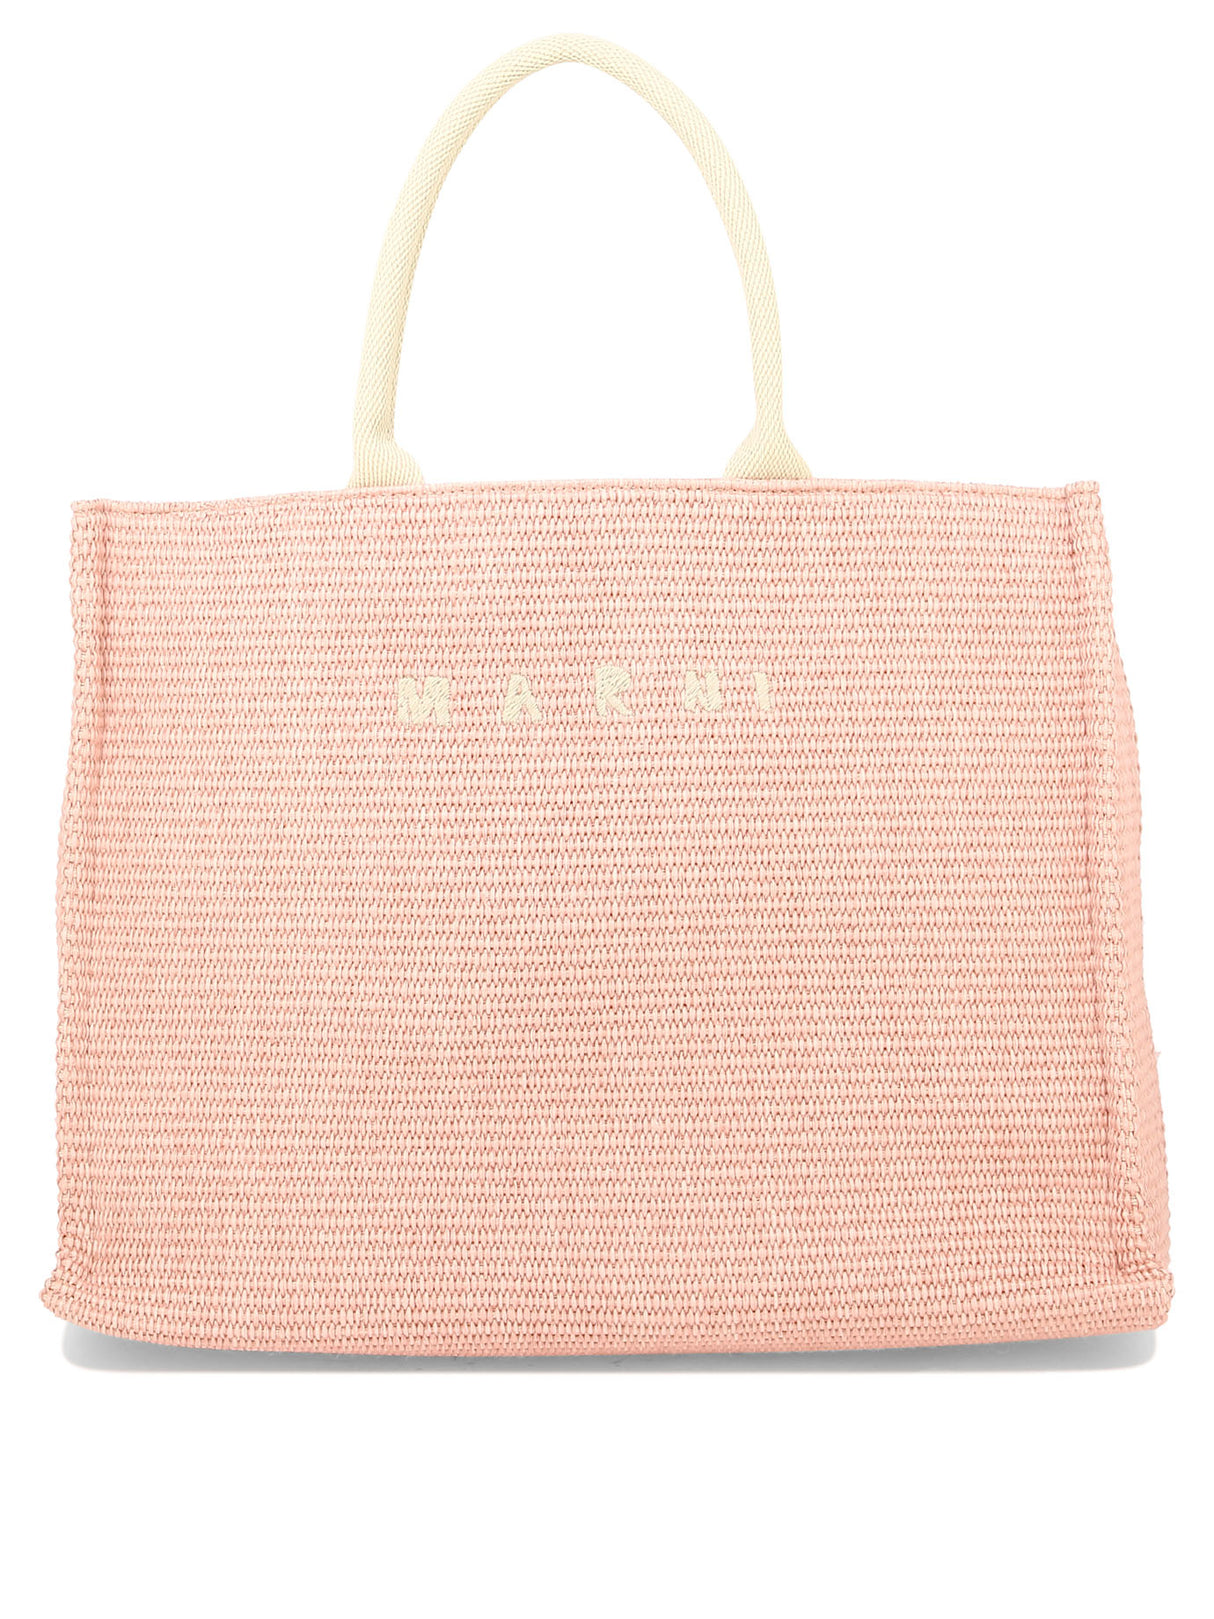 MARNI Elegant Pink Tote Handbag with Multiple Carrying Options